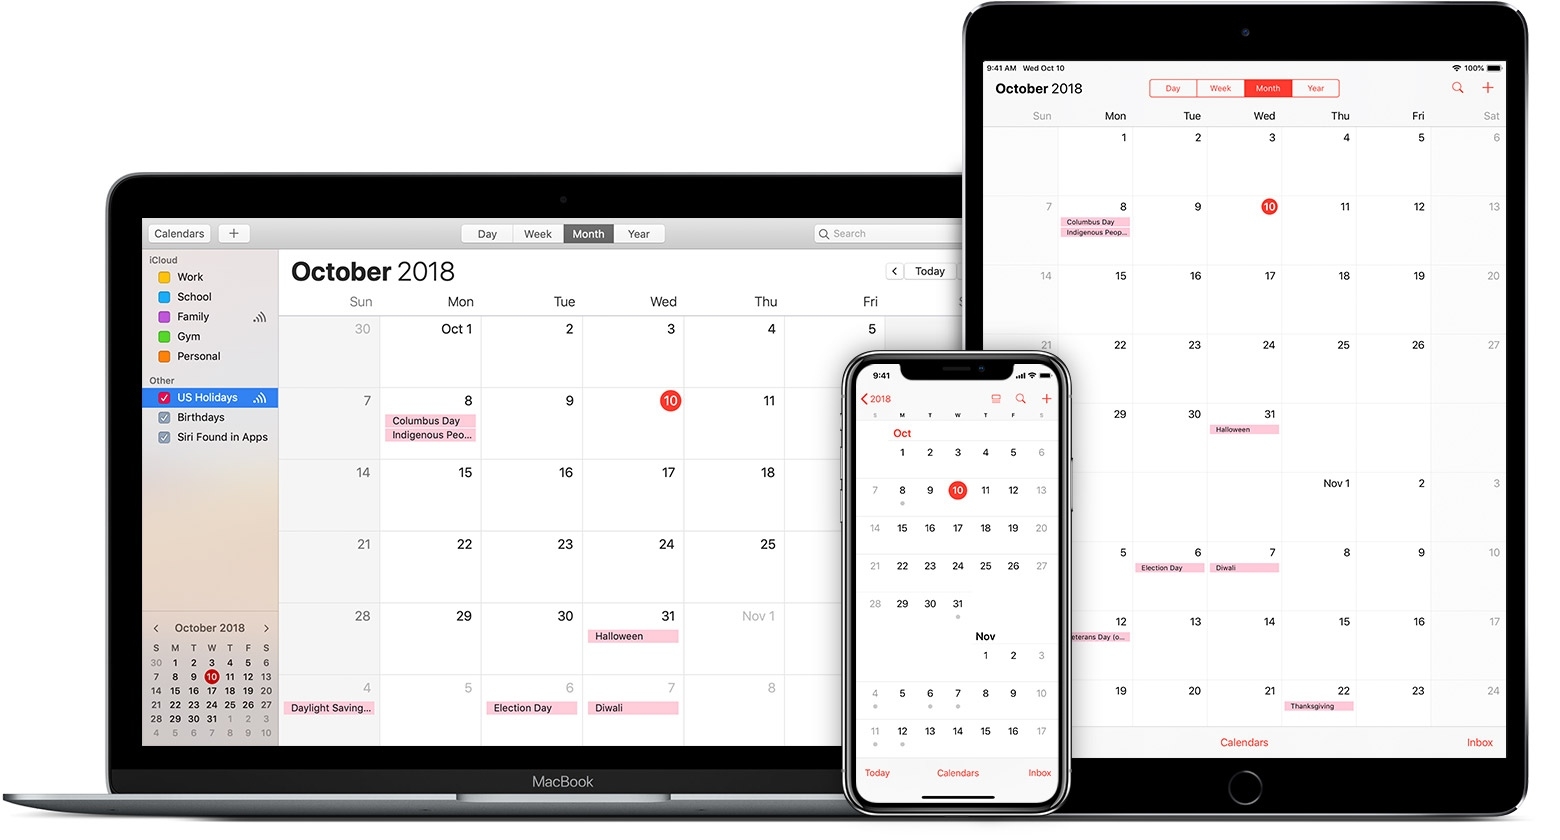 Subscribe To Us Holidays Calendar In Icloud Printable Blank Calendar